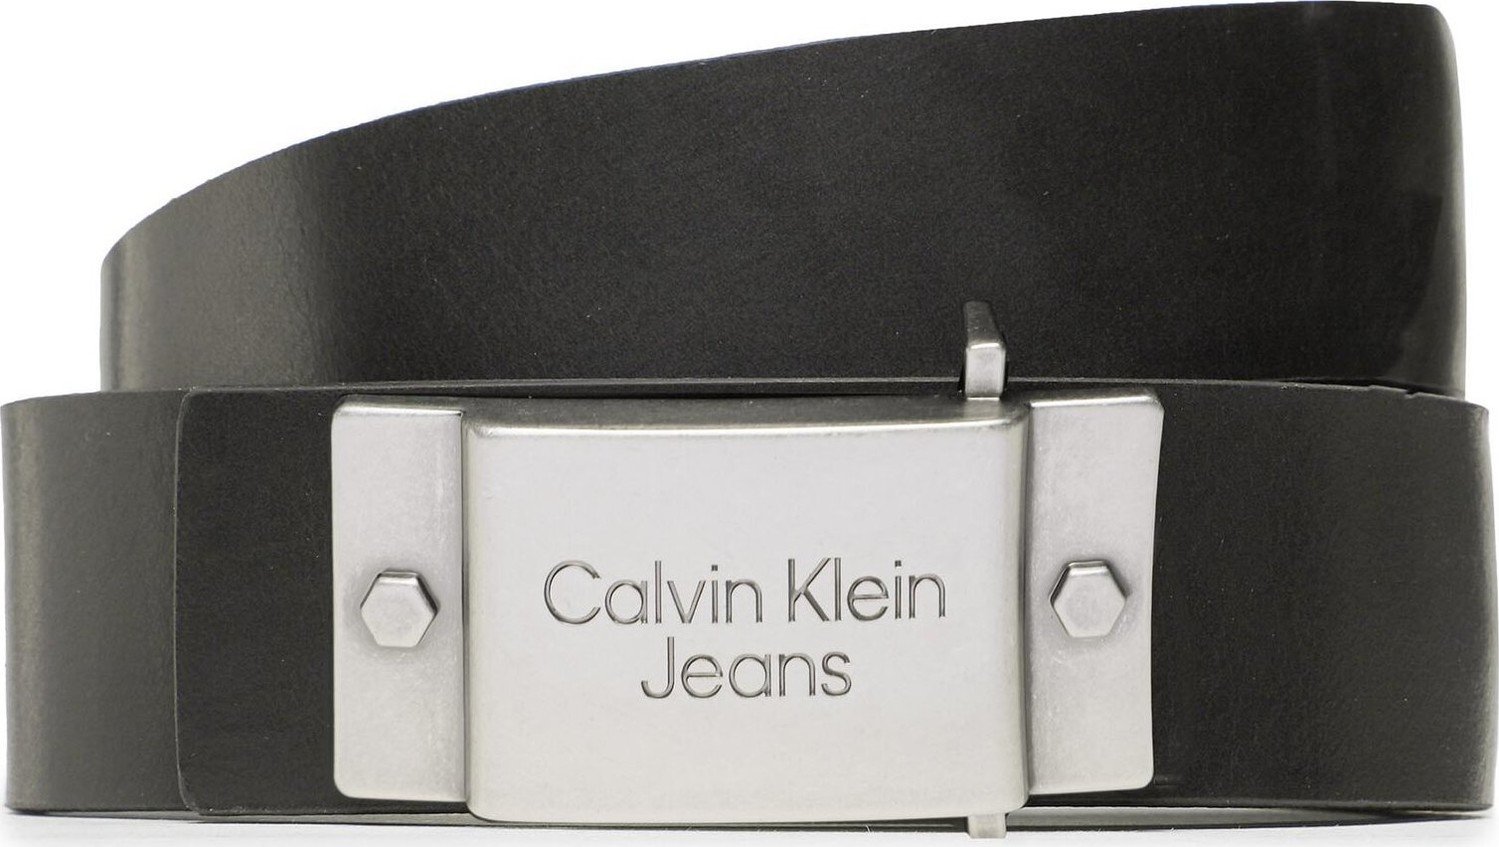 Pánský pásek Calvin Klein Jeans Plaque Lthr Belt 40mm K50K510474 BDS